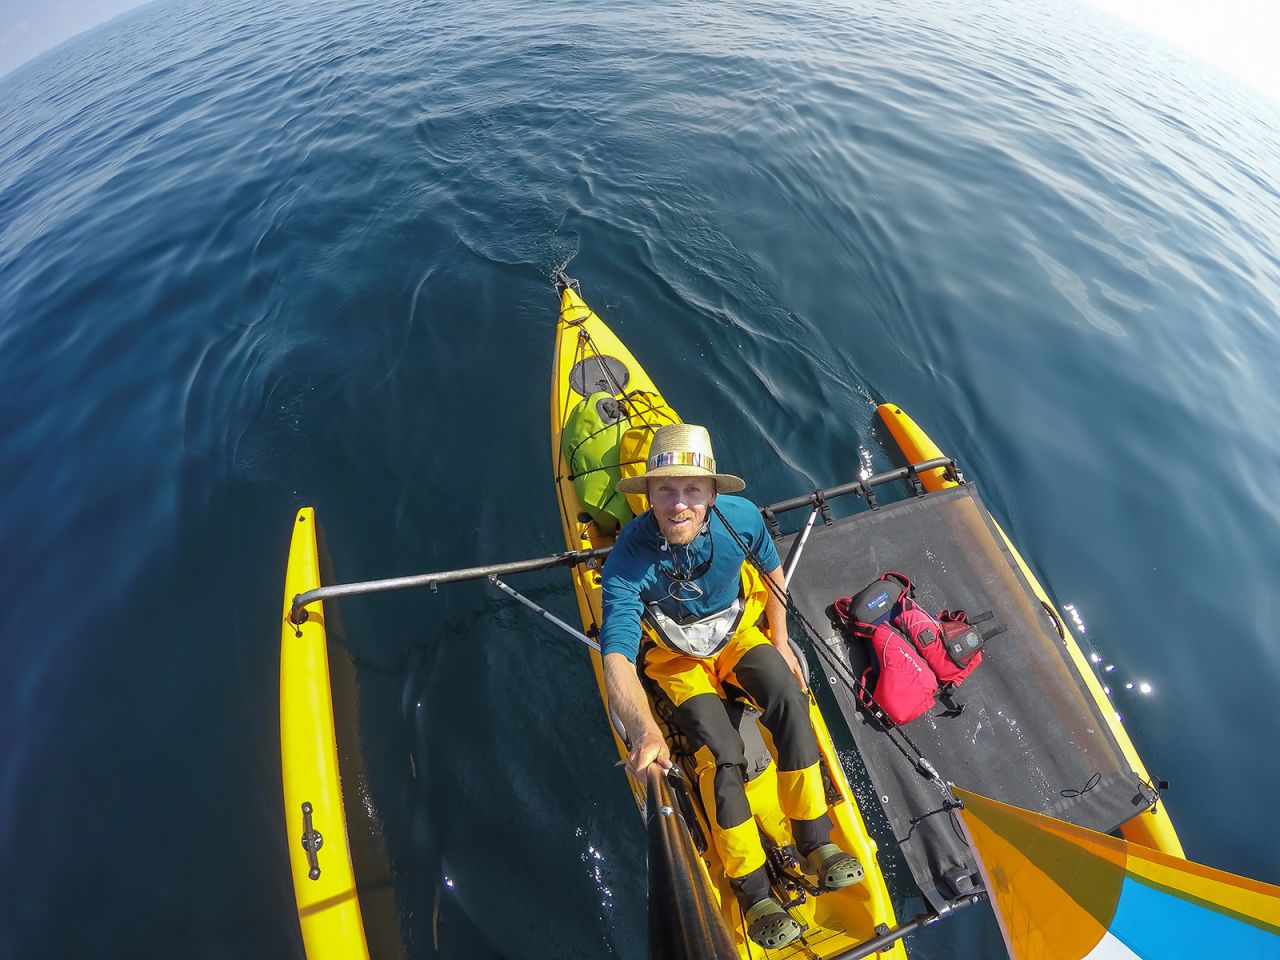 The adventurer traveled through North America's Lake Superior on a trimaran.